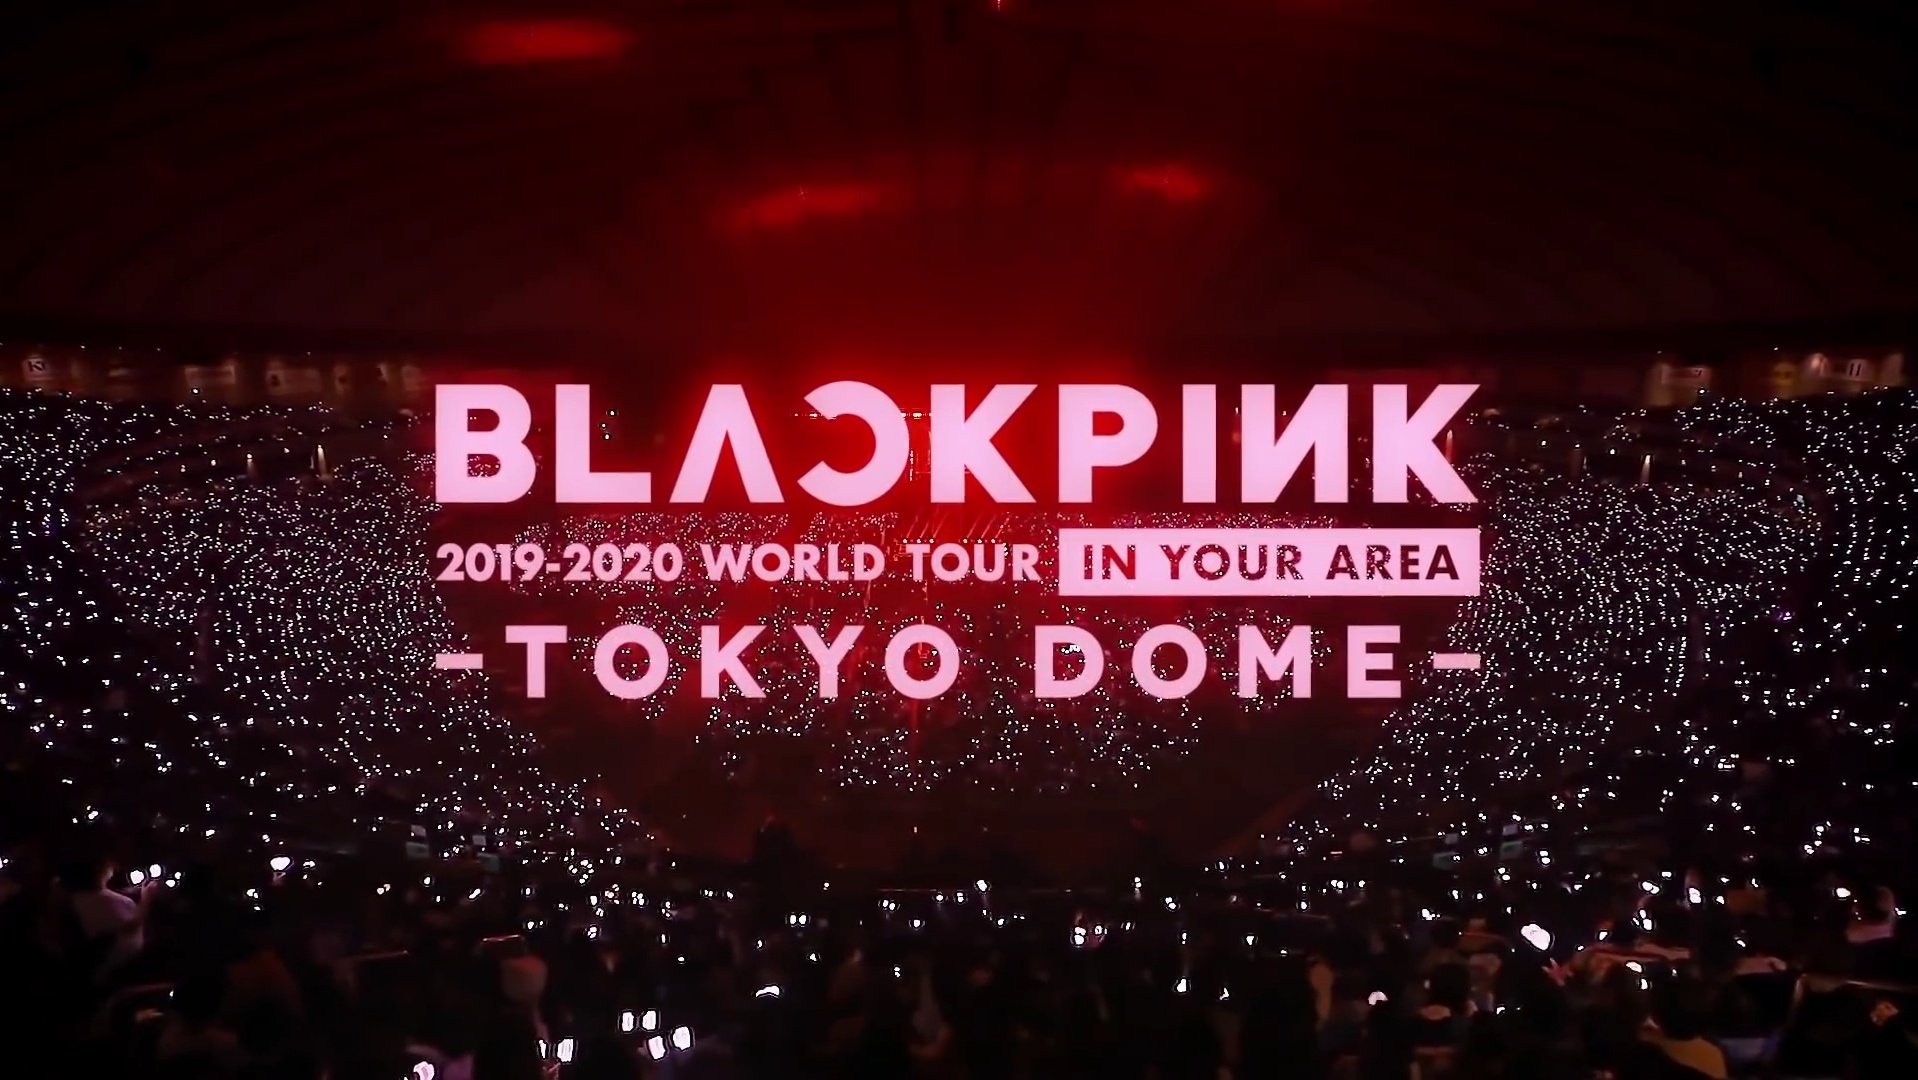 Blackpink Team  on X: "#BLACKPINK 2019-2020 WORLD TOUR IN YOUR